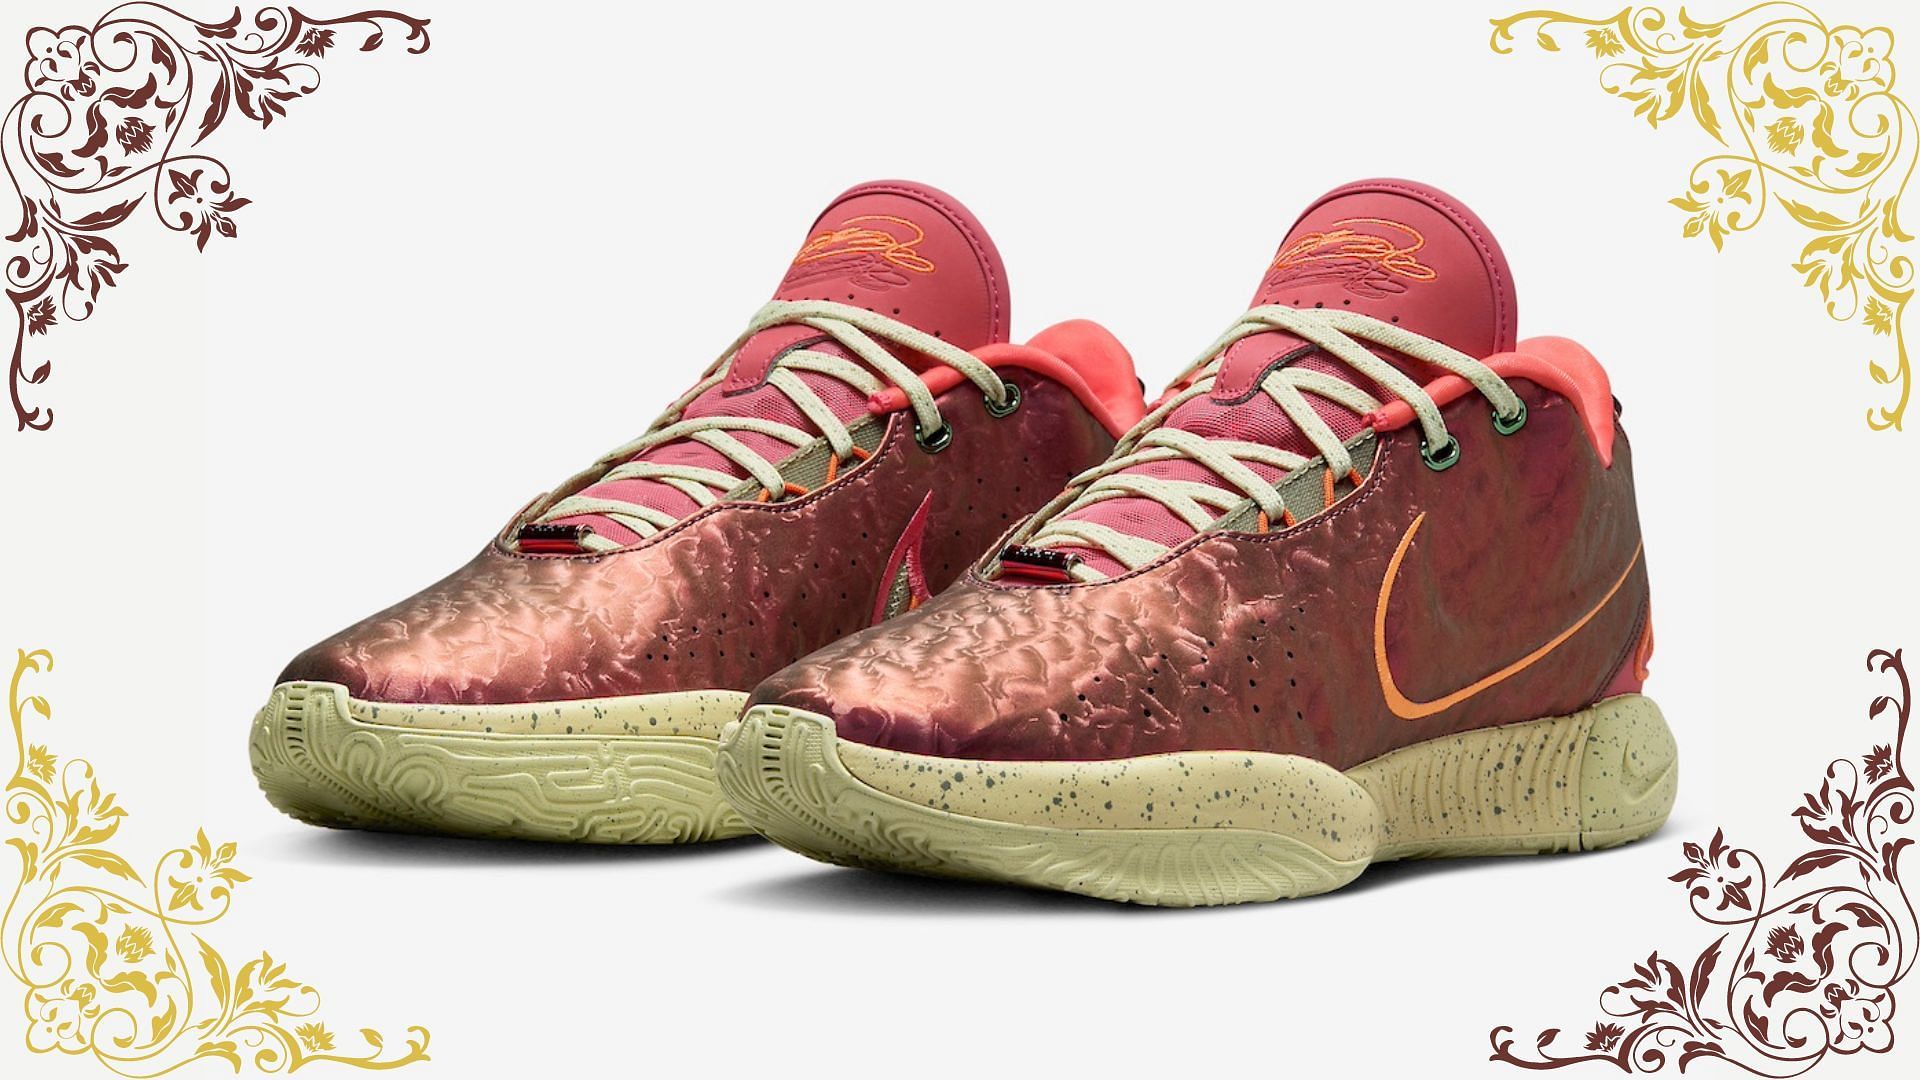 Nike LeBron 21 Queen Conch sneakers (Image via YouTube/@inboxtogo)